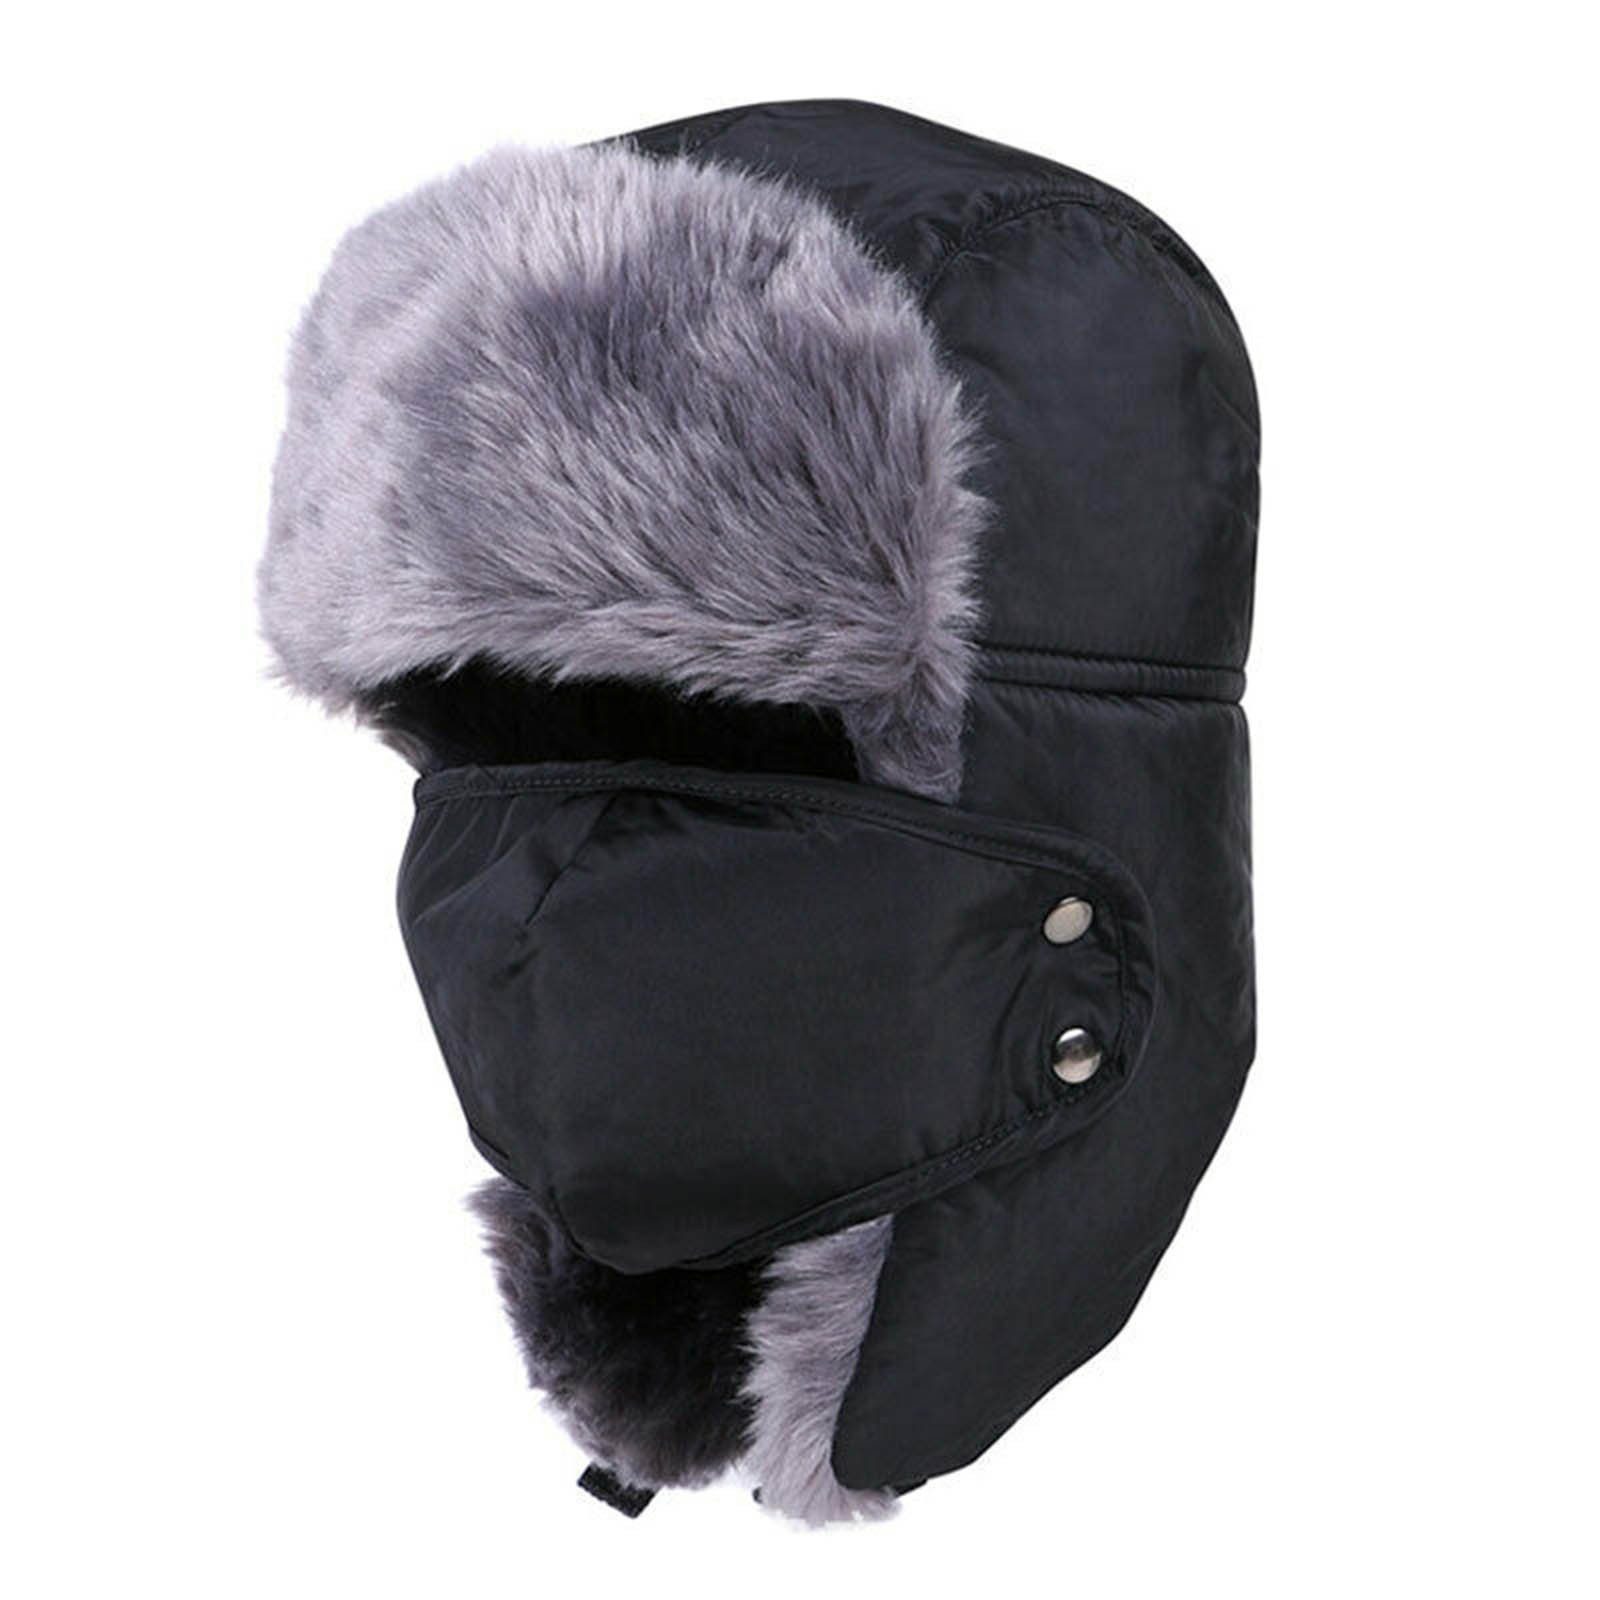 Hüte Blusmart Fleecemütze Winter Warme Winddicht Ohr Kälte-Proof Outdoor Kappe Plüsch grau